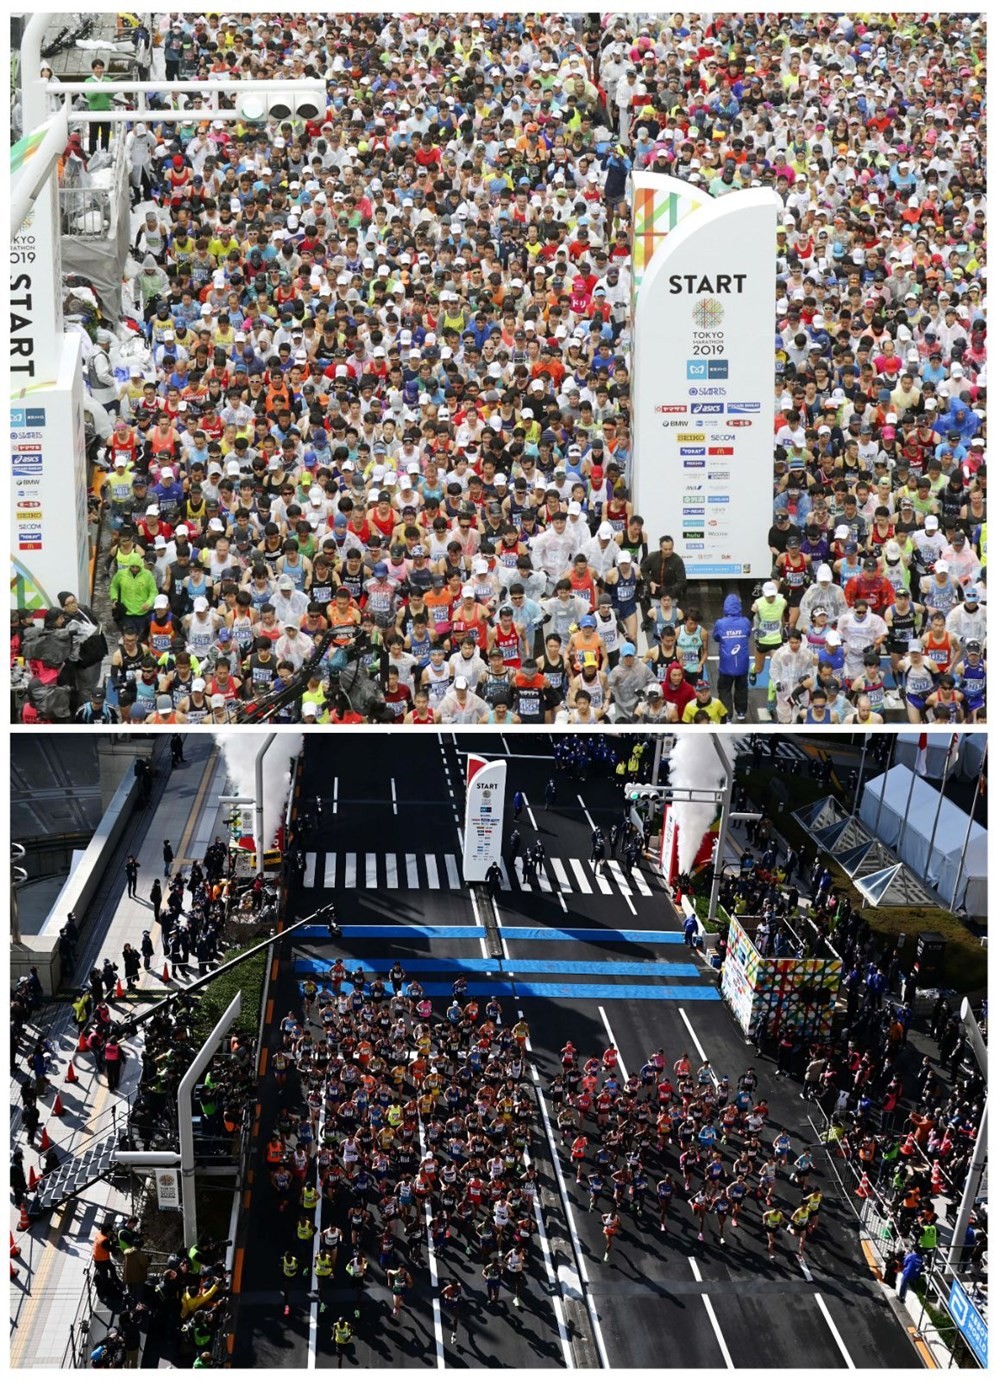 Tokyo Maratonu'nda korona virüs etkisi